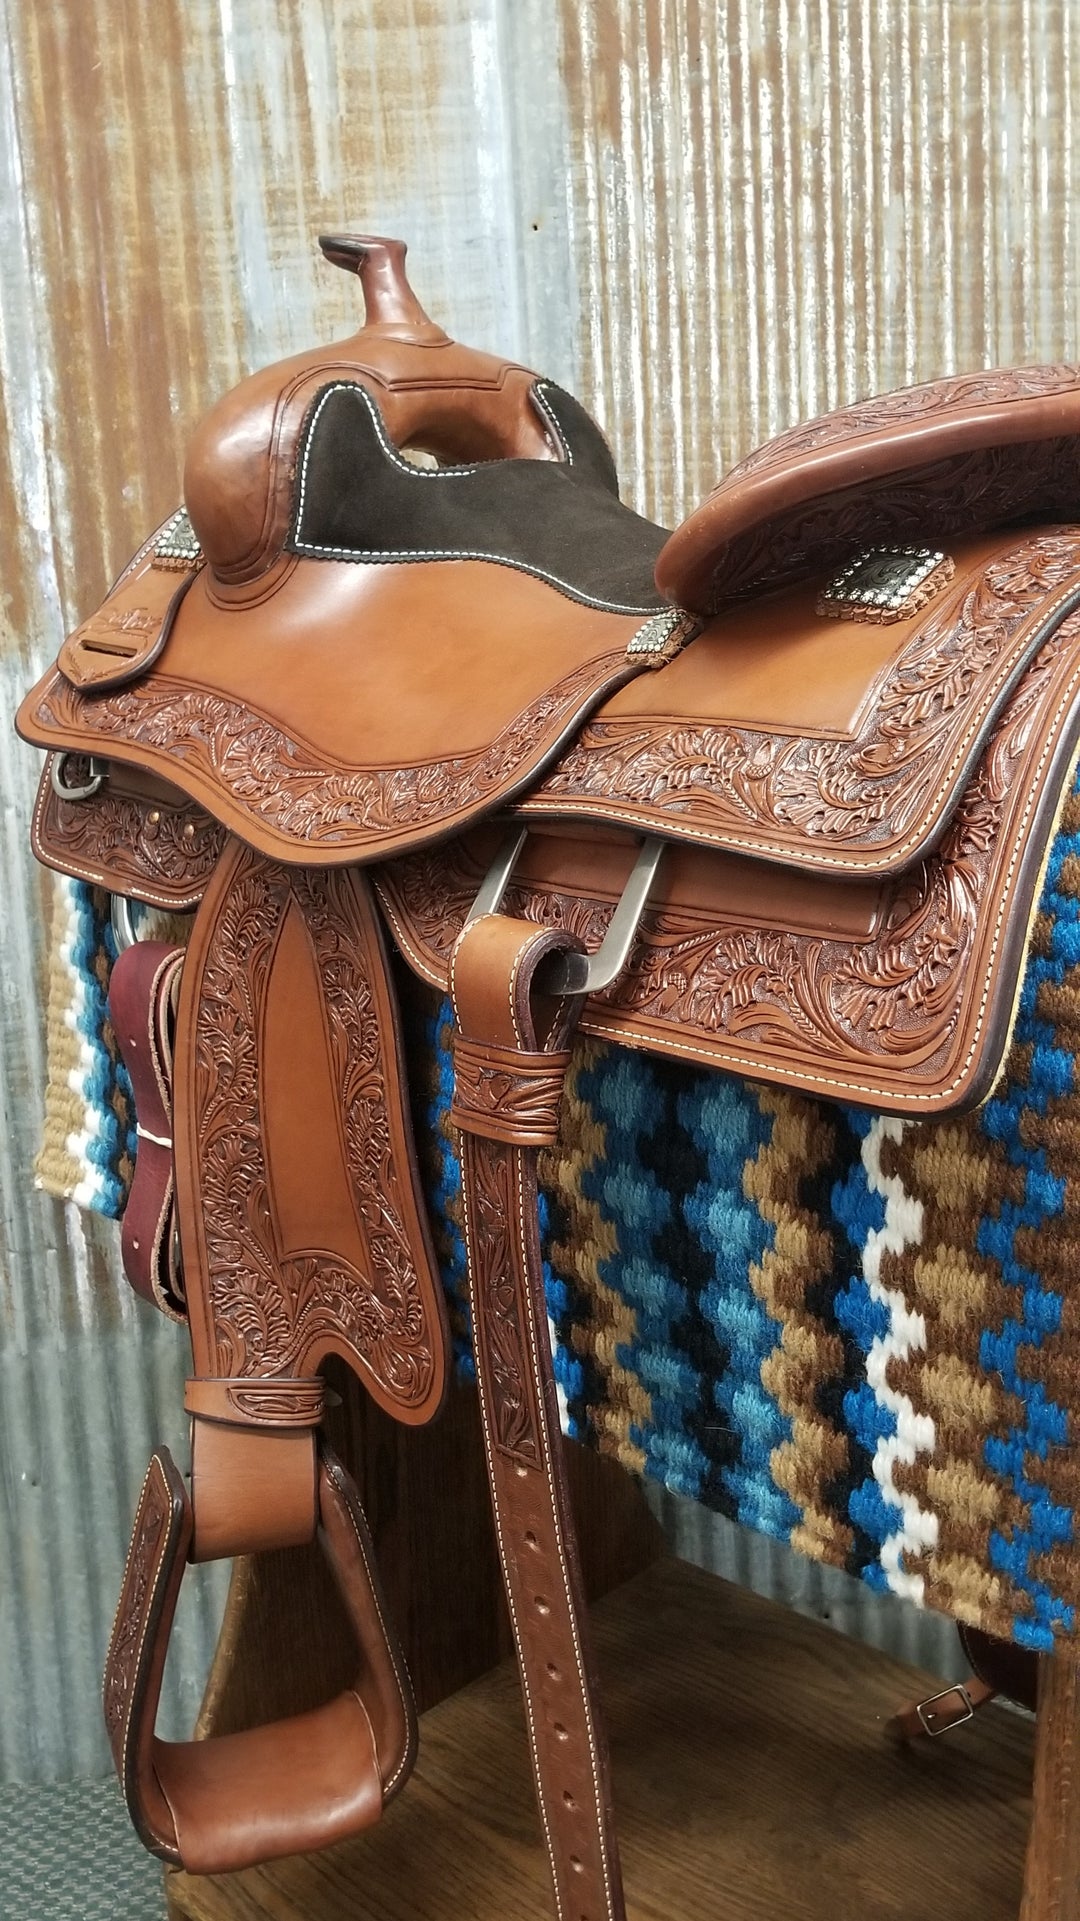 Scott Thomas Reiner Saddle